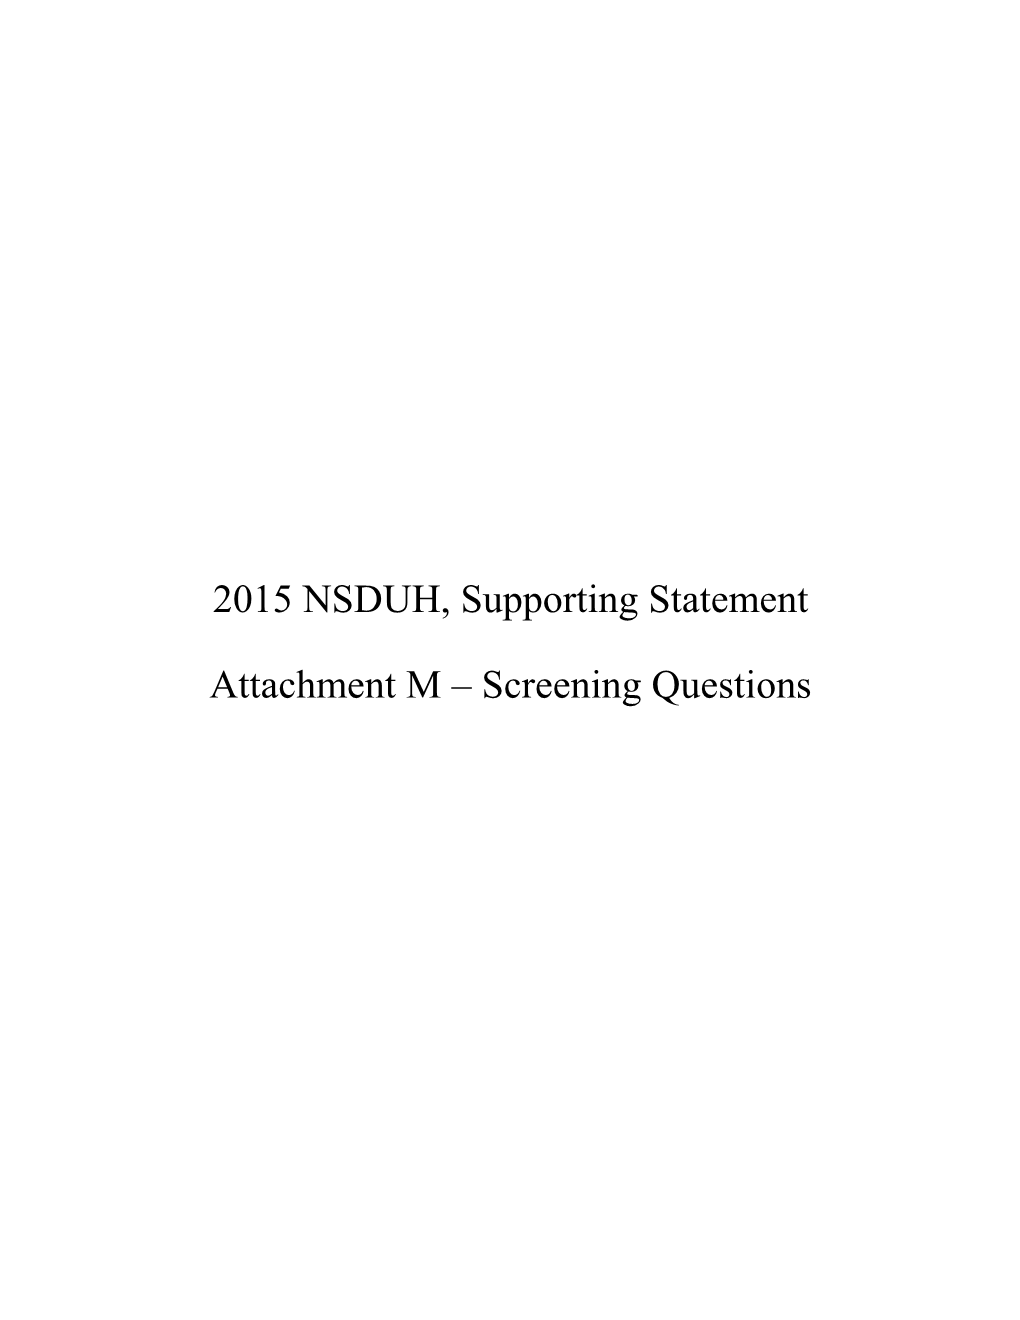 2015 NSDUH, Supporting Statement Attachment M